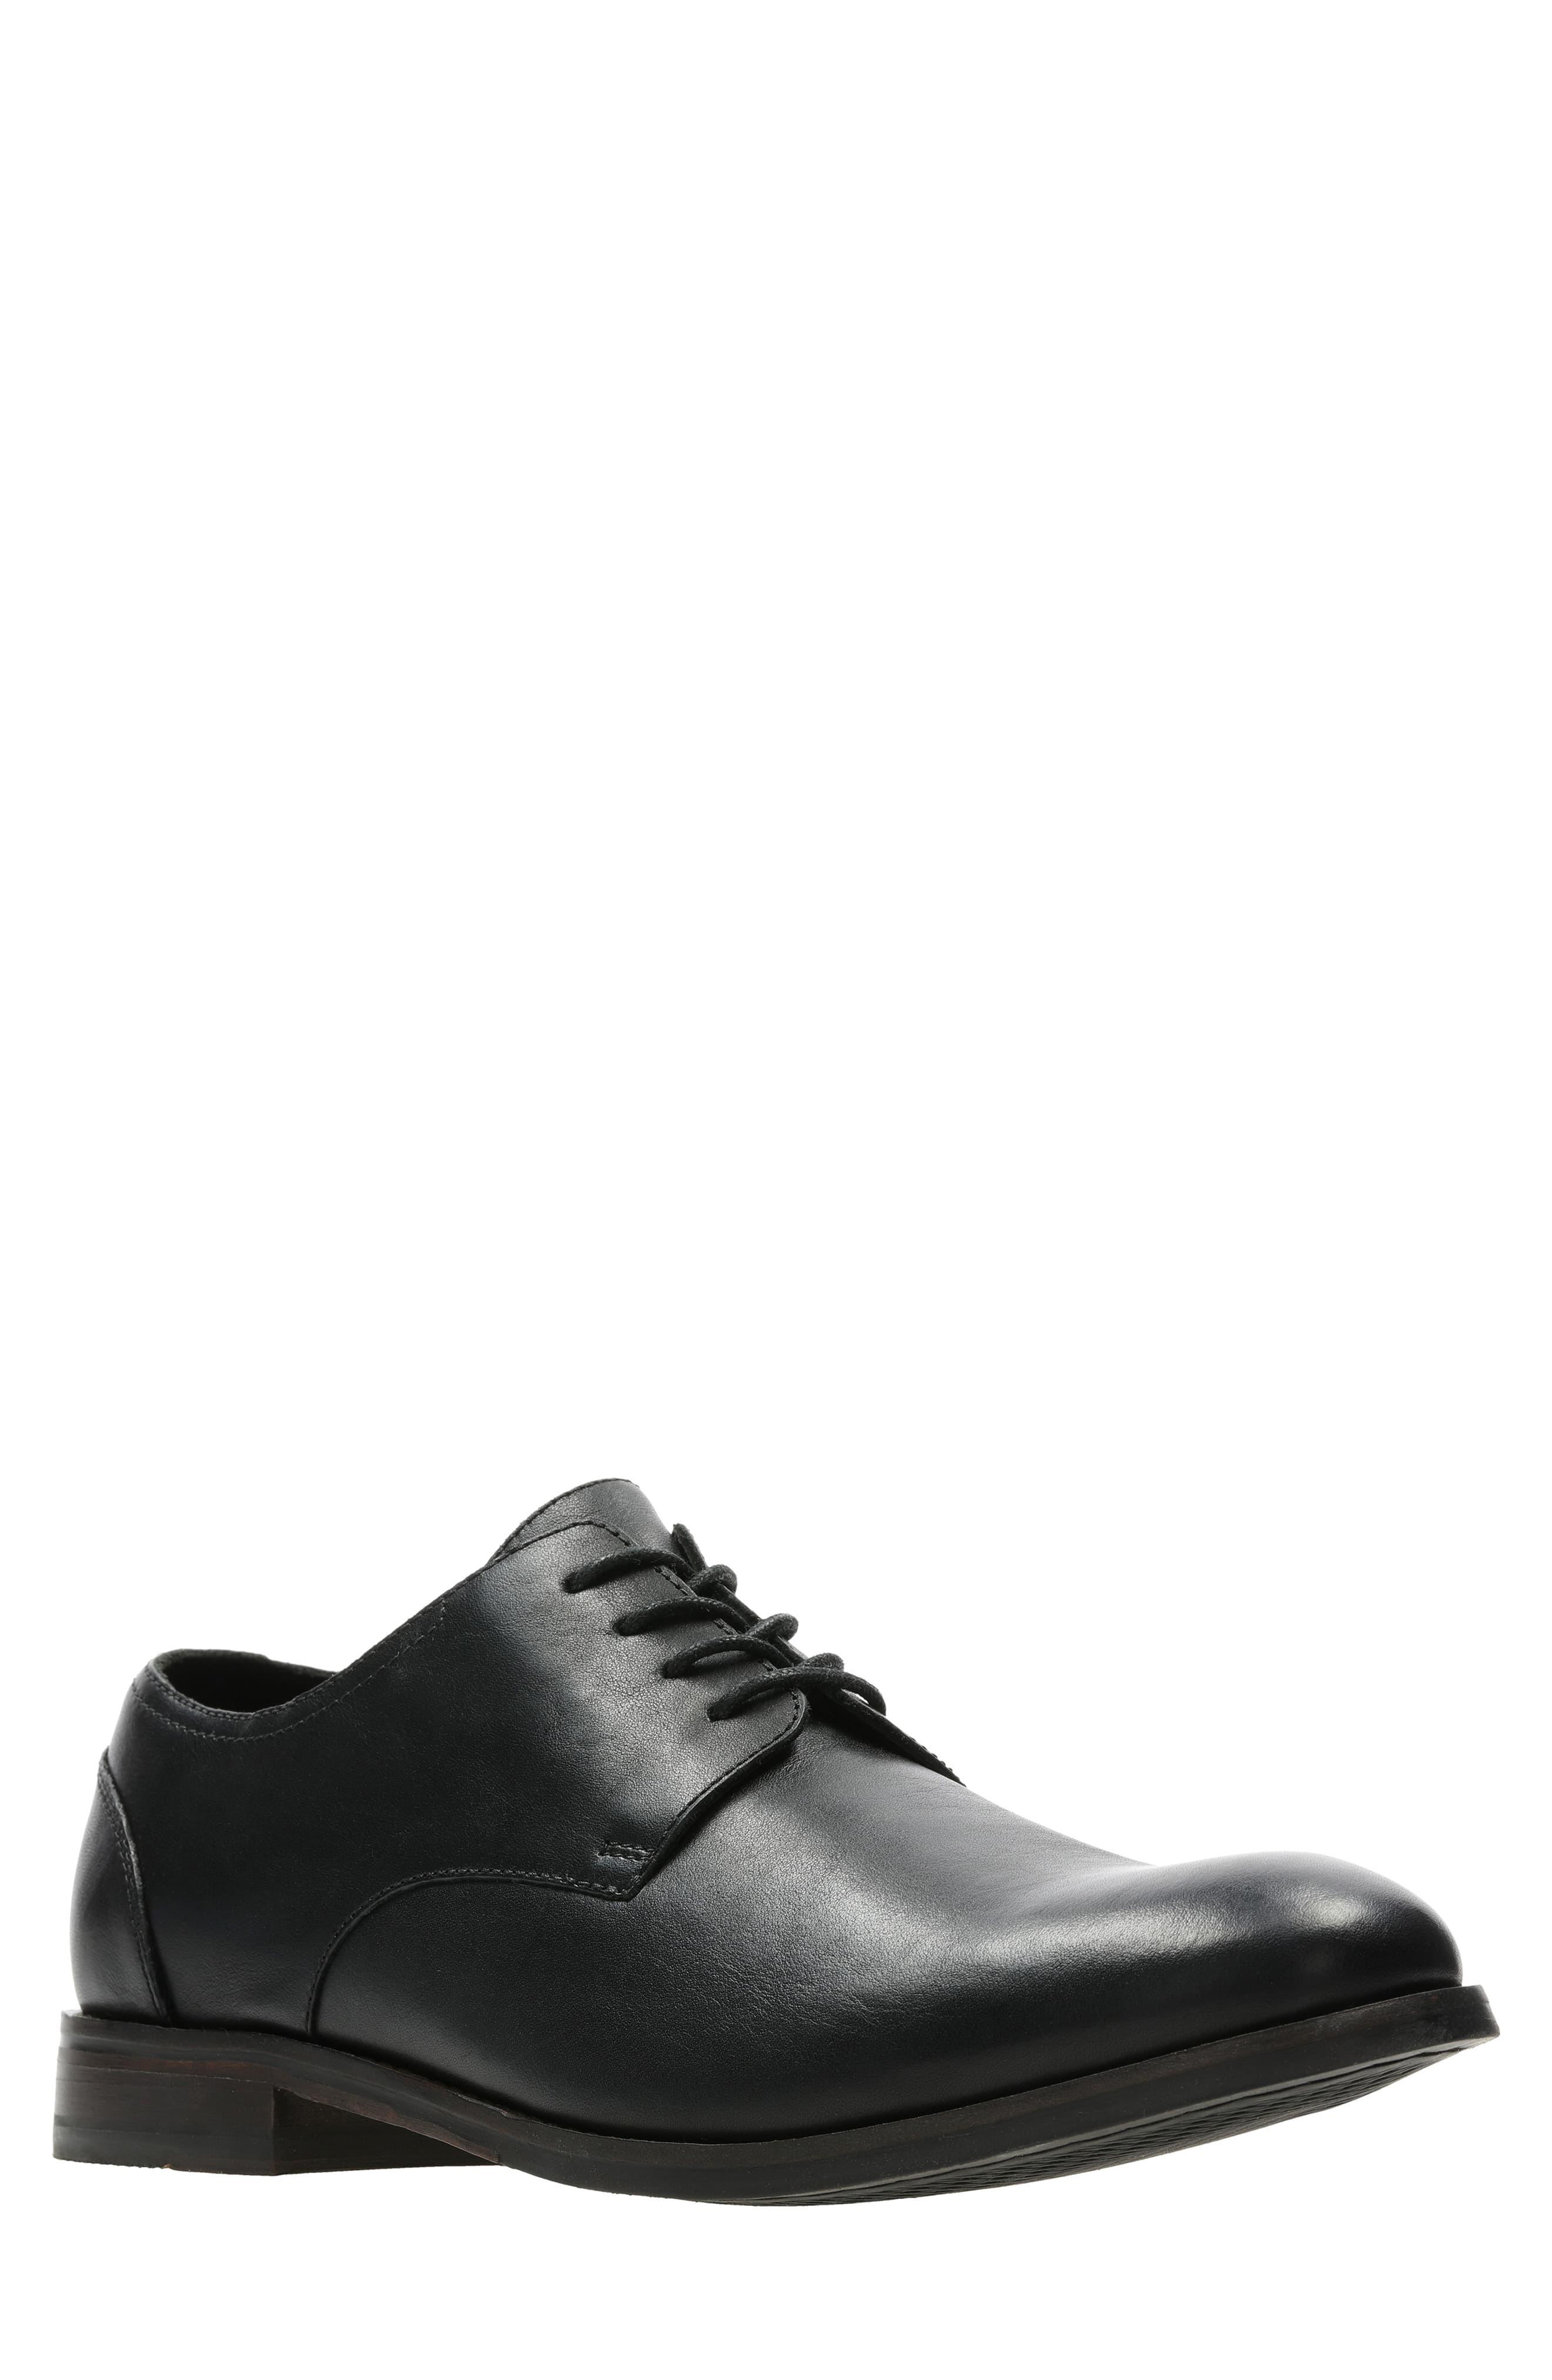 Clarks Flow Plain Derby Leather Shoes in Black Leather (Black) for Men ...